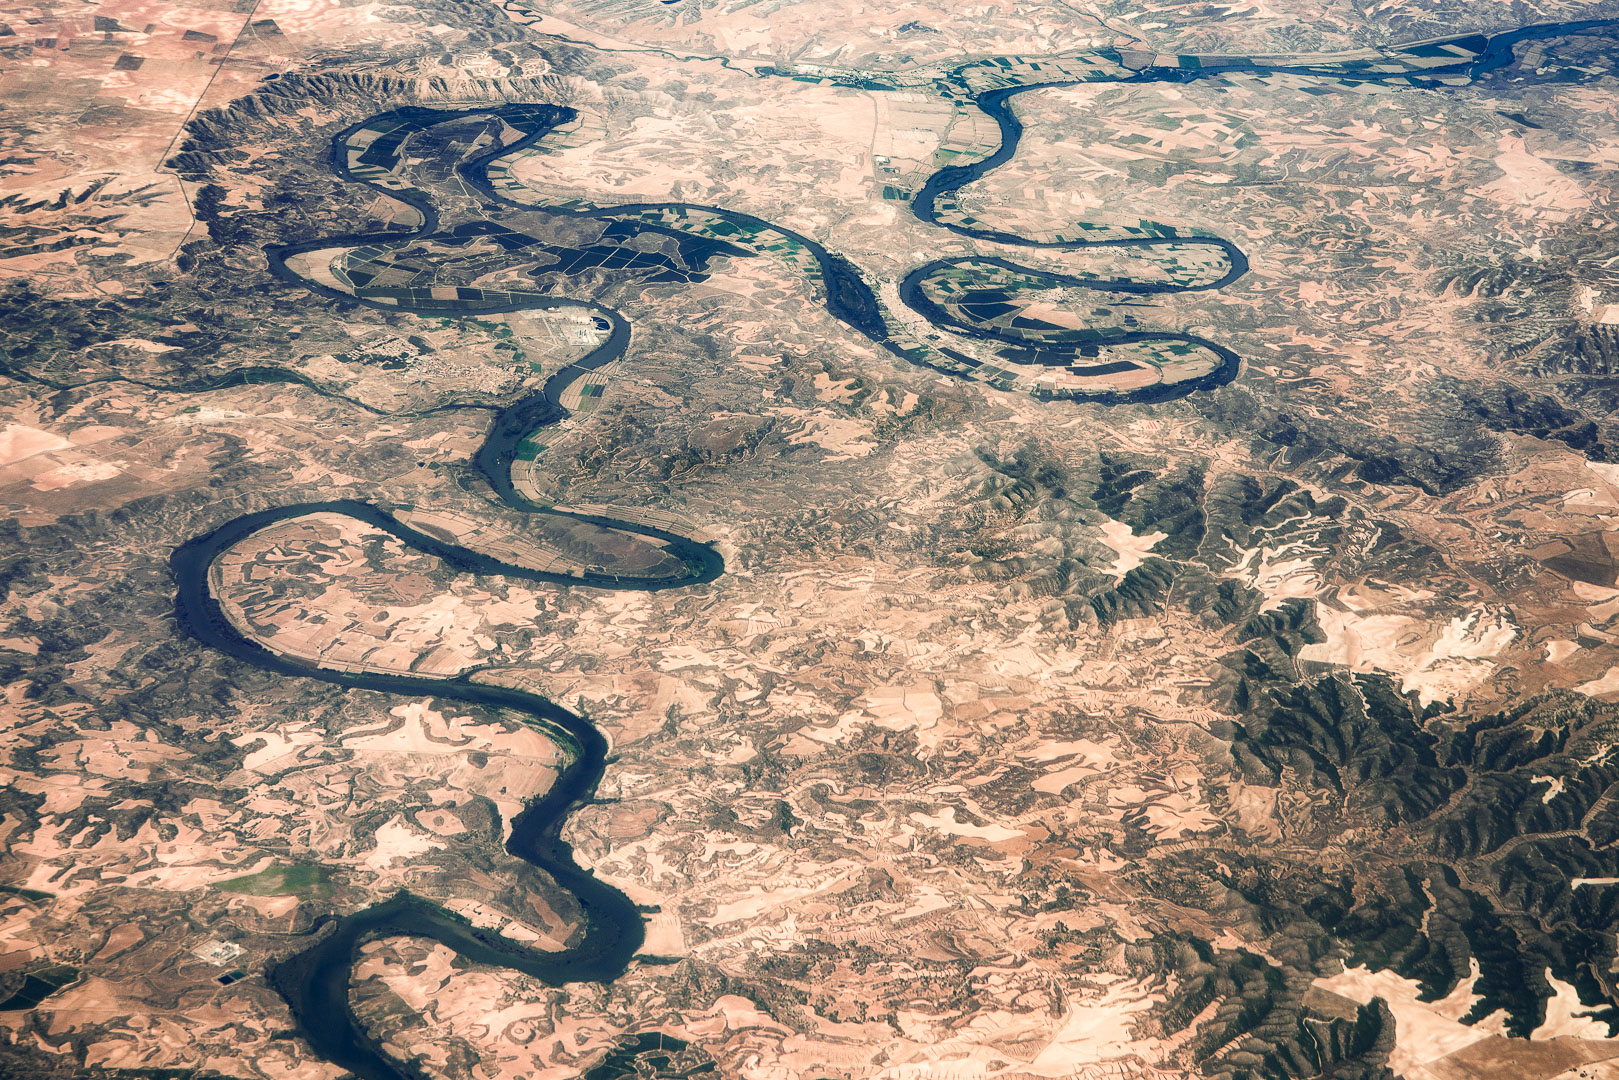 Ebro River, Spain, aerial image